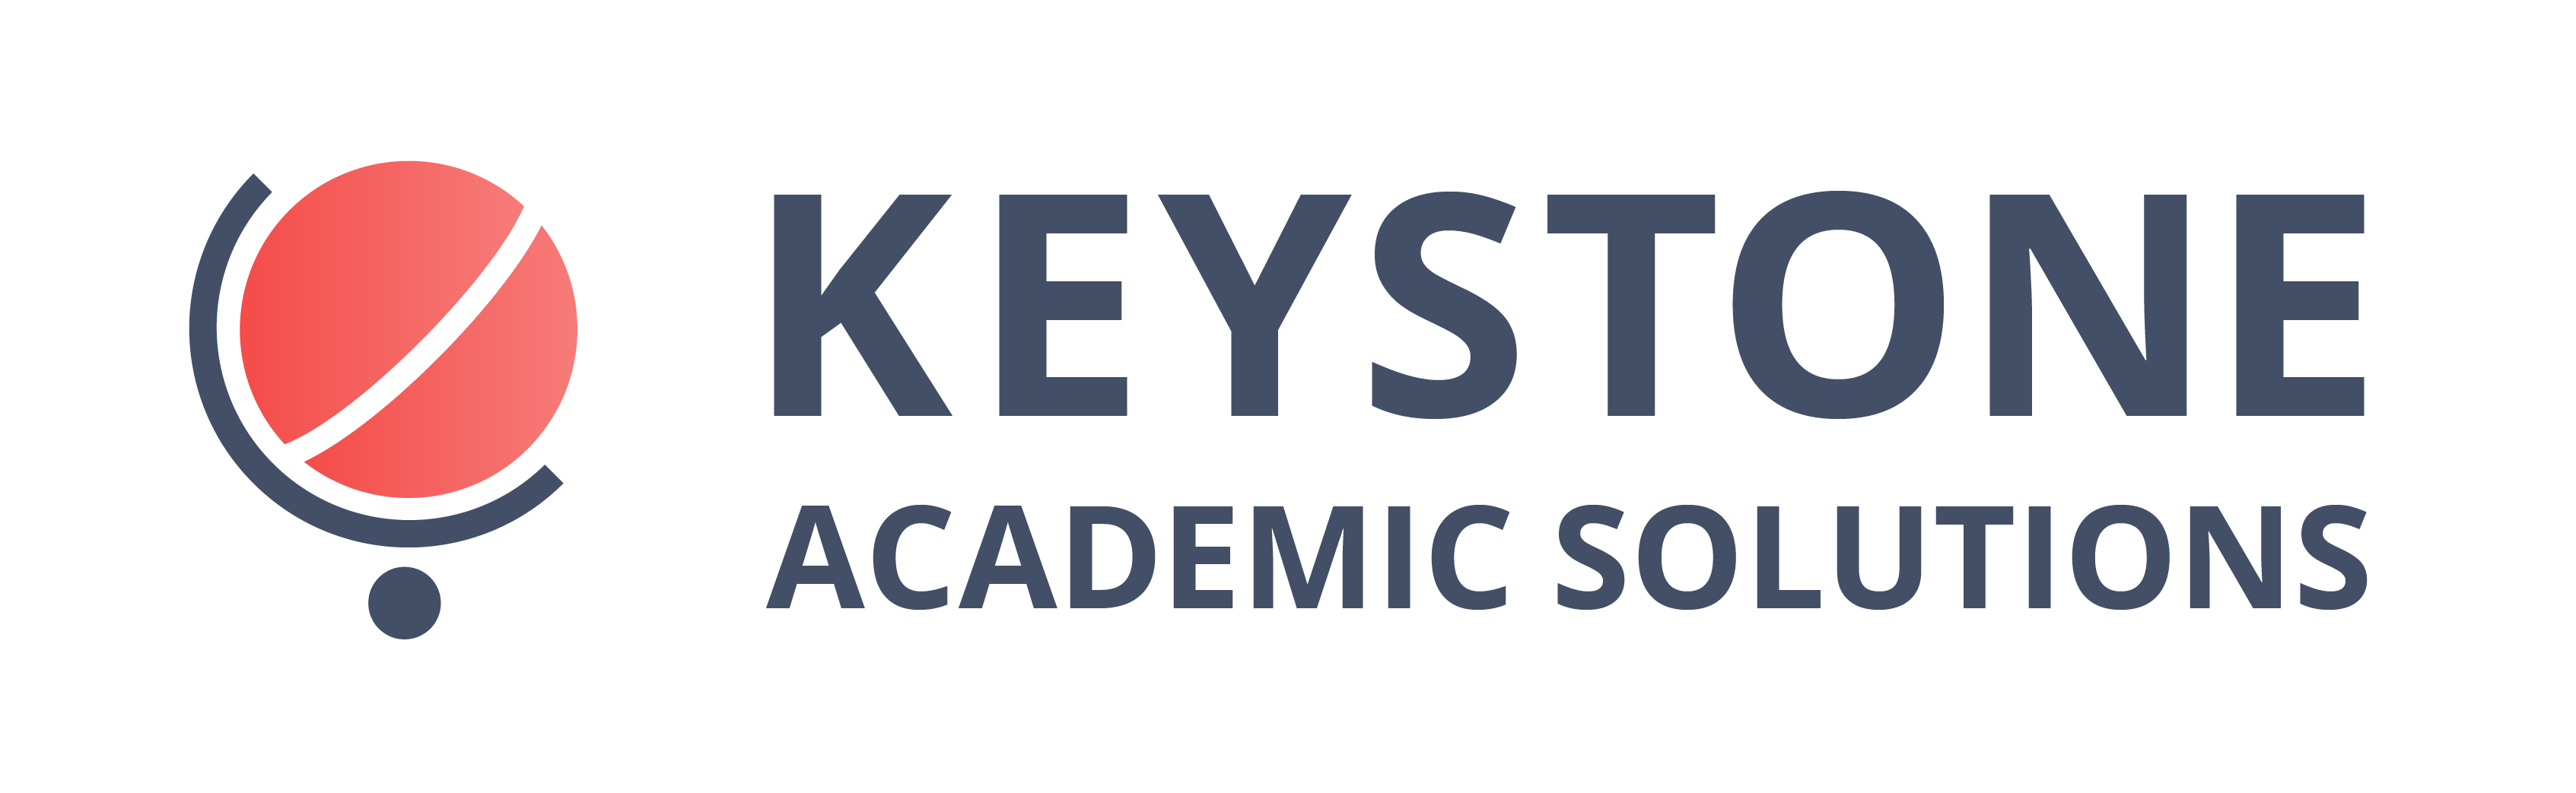 Keystone Academic Solutions